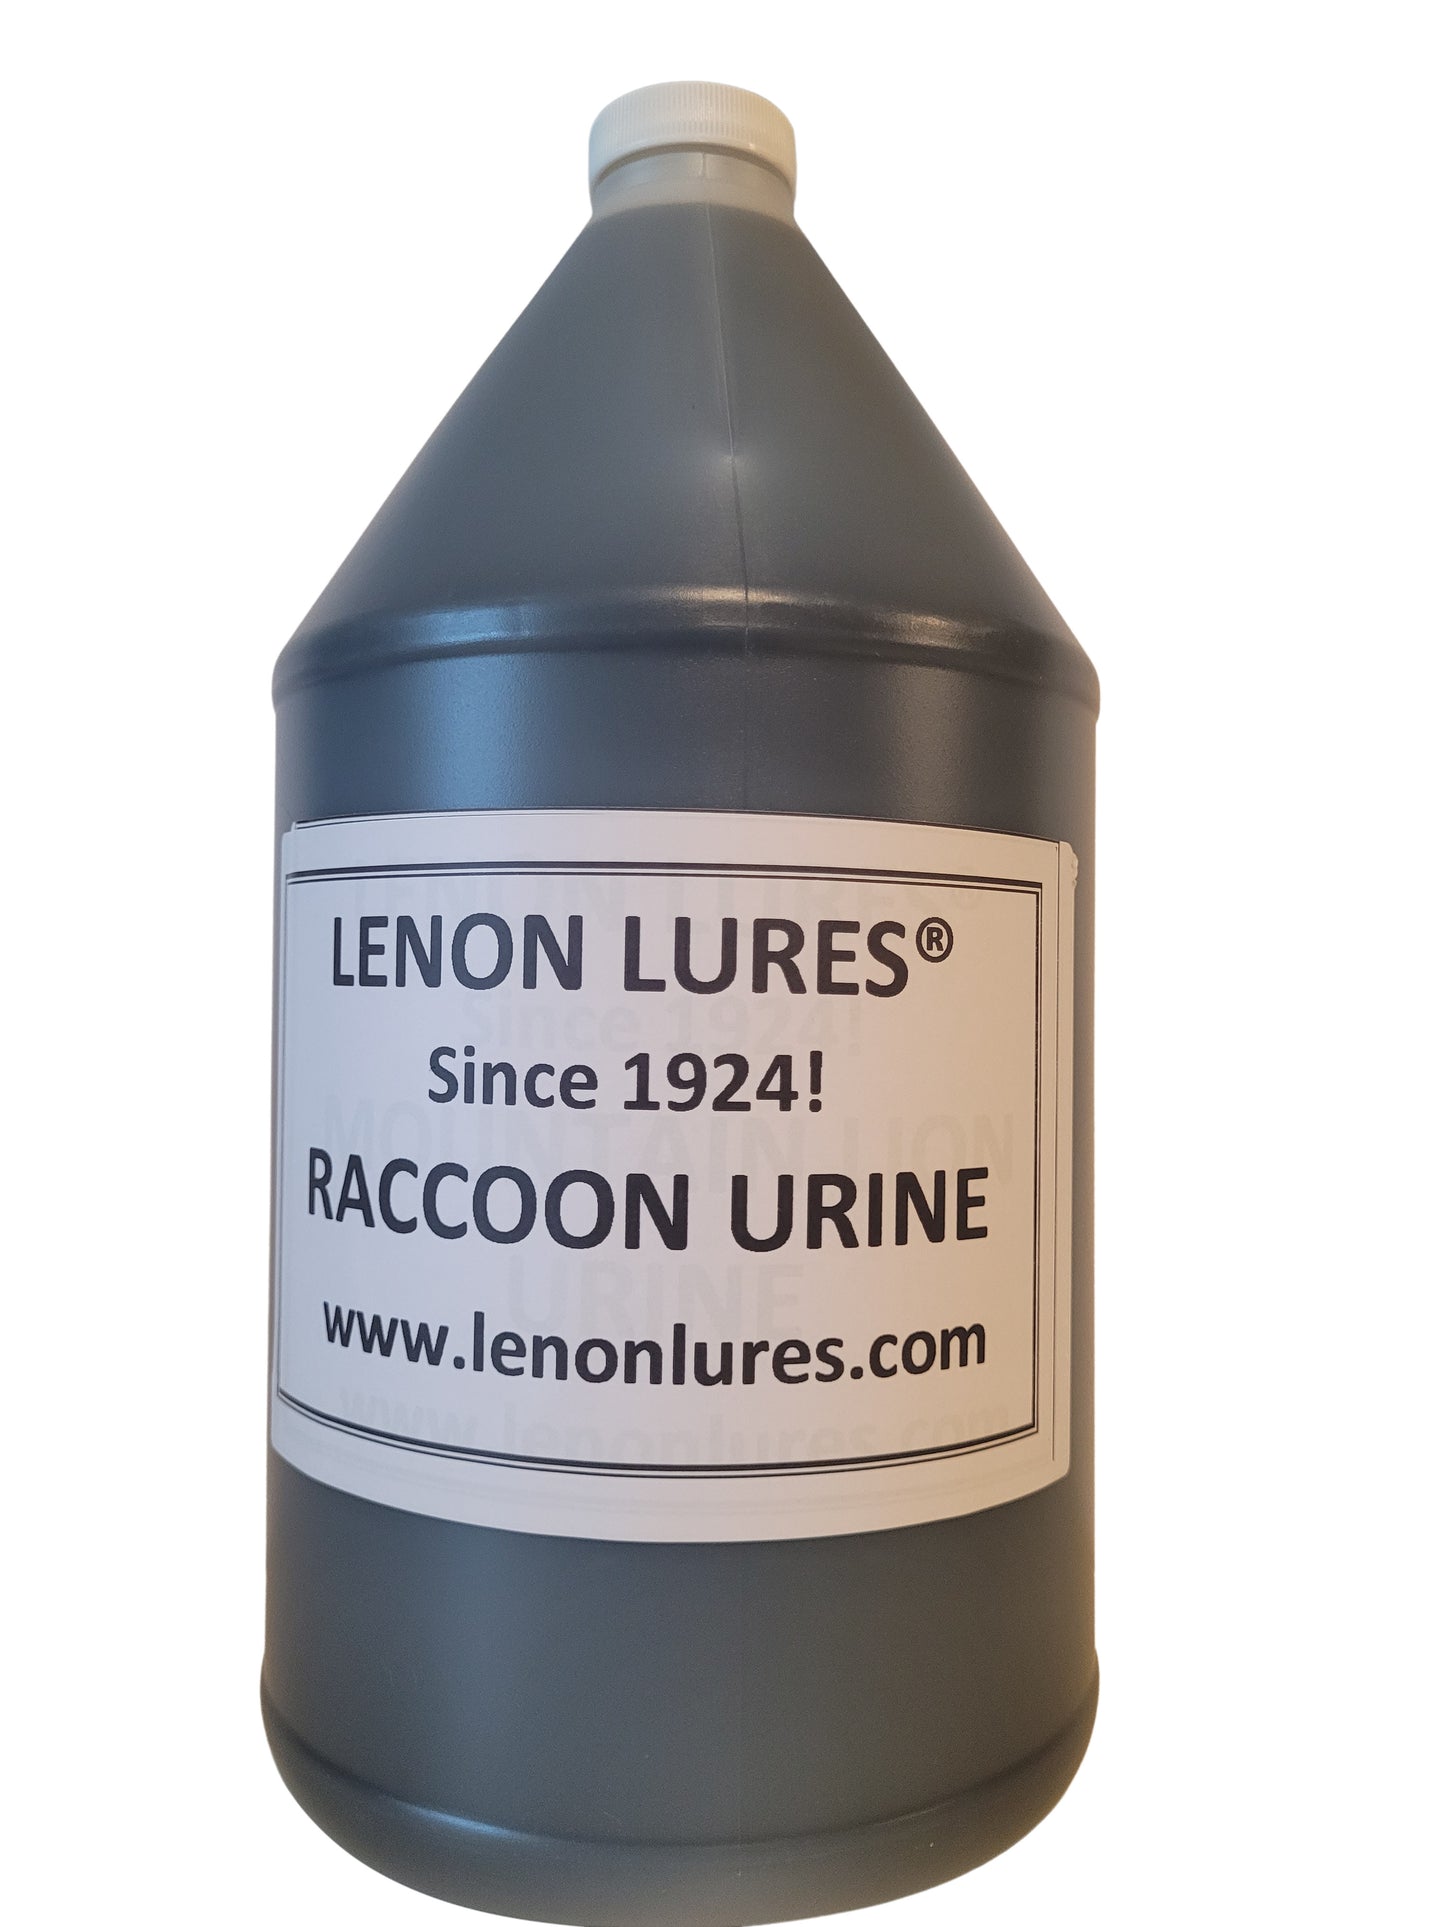 Lenon's Raccoon Urine